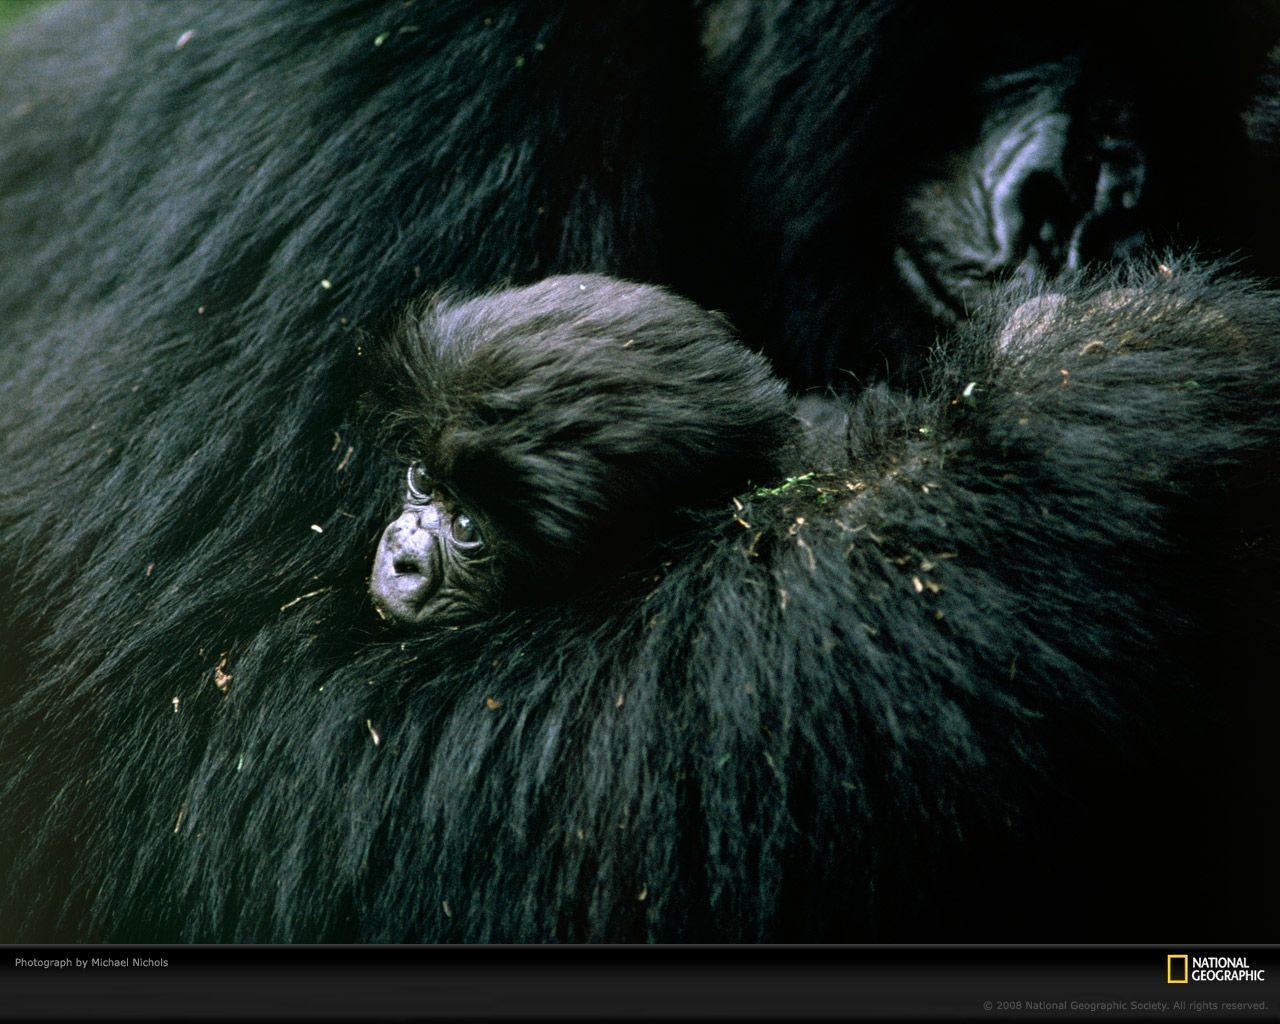 Baby Gorilla Photo, Gorilla Wallpaper, Download, Photo